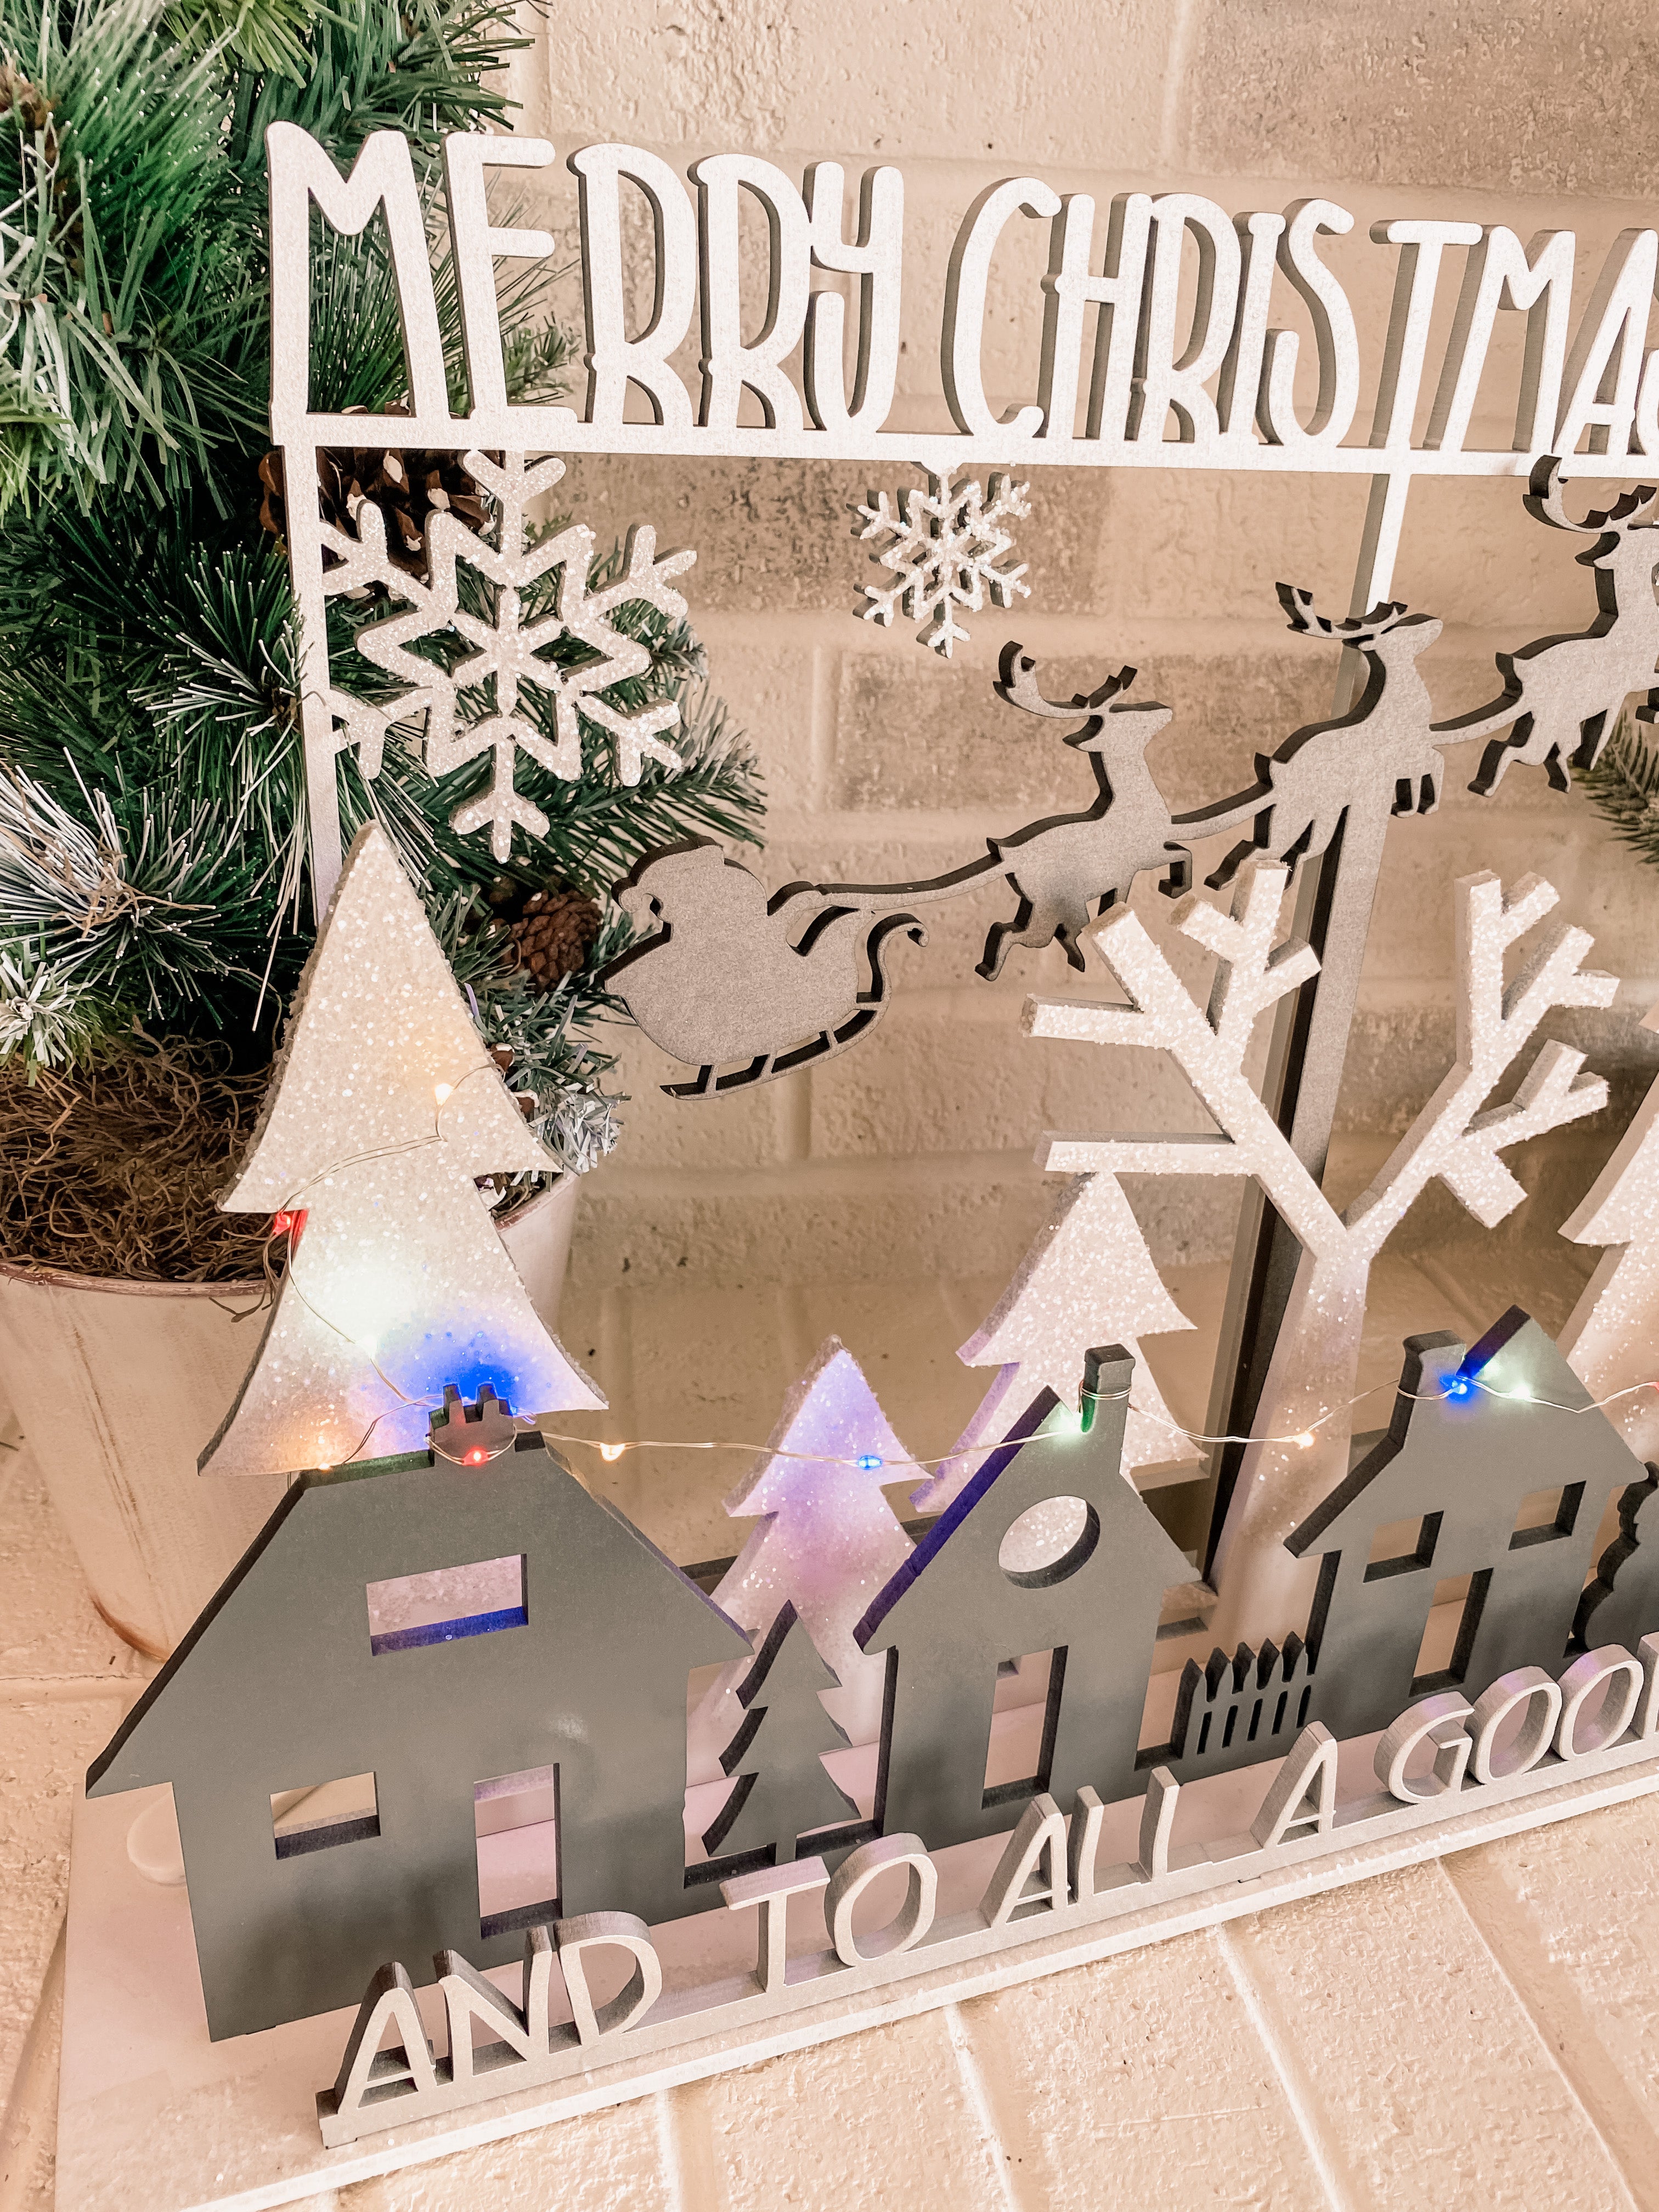 DIY White Christmas Village